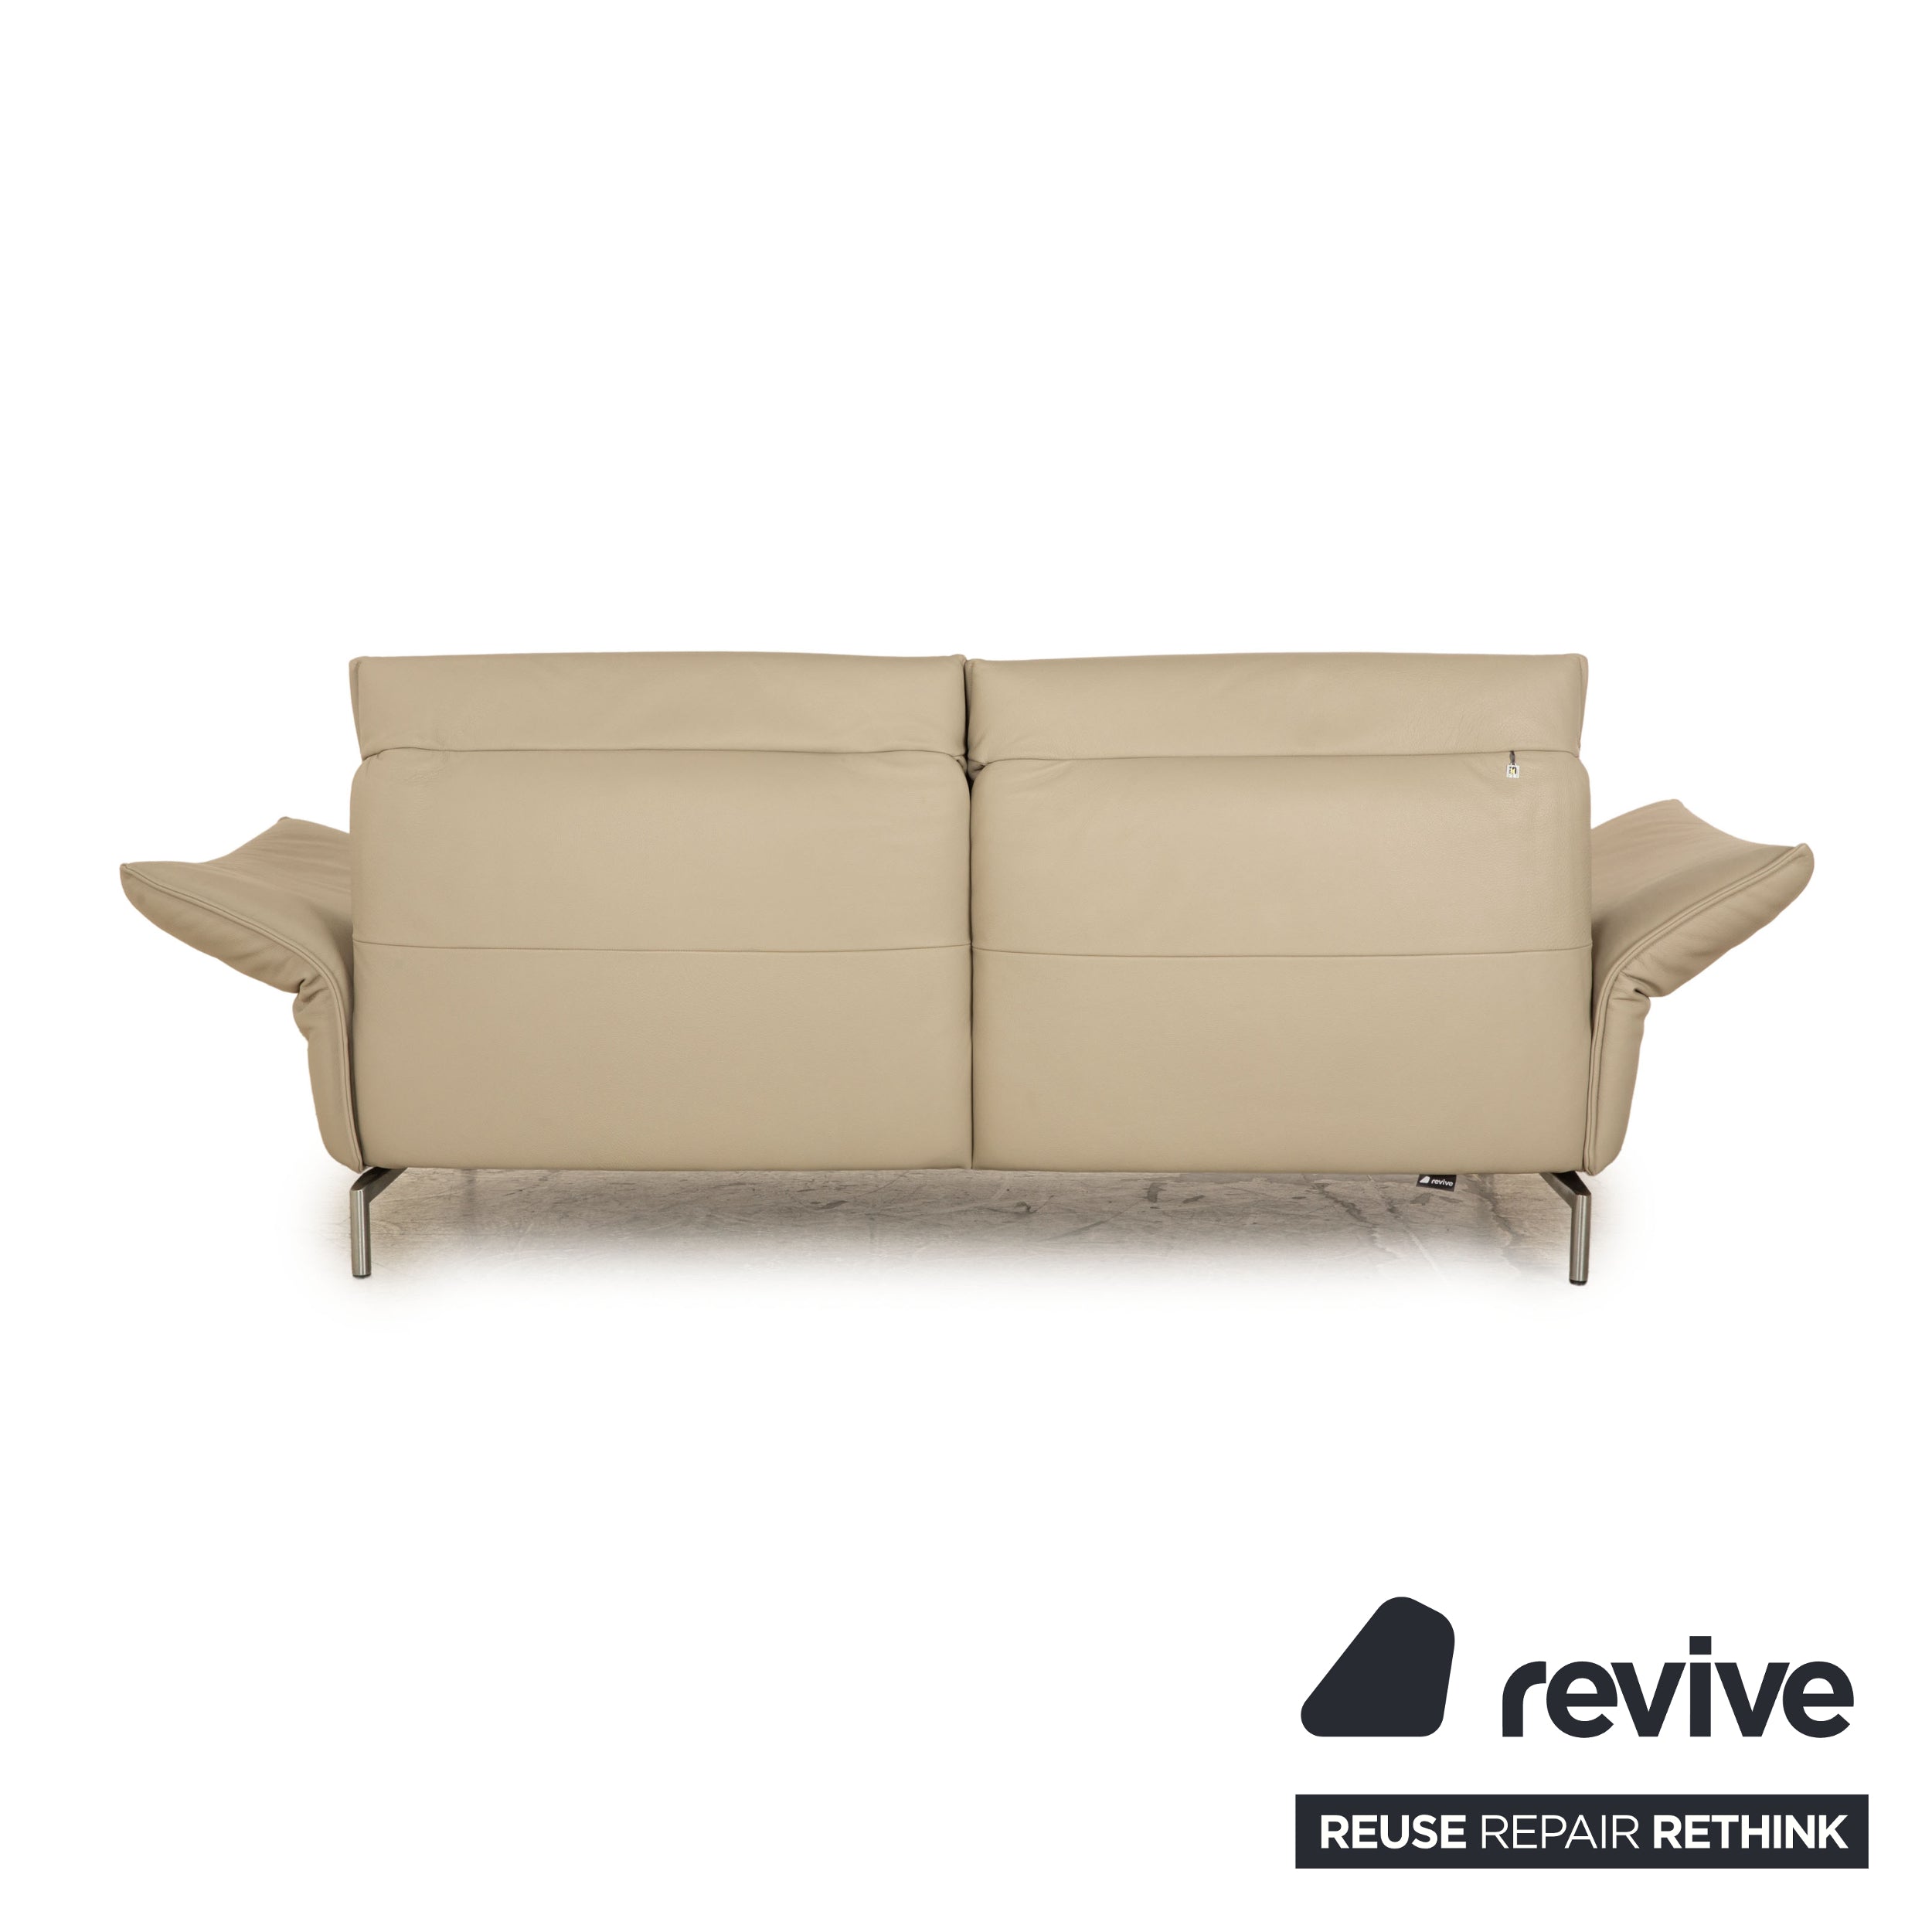 Koinor Vanda Leder Zweisitzer Creme Sofa Couch manuelle Funktion